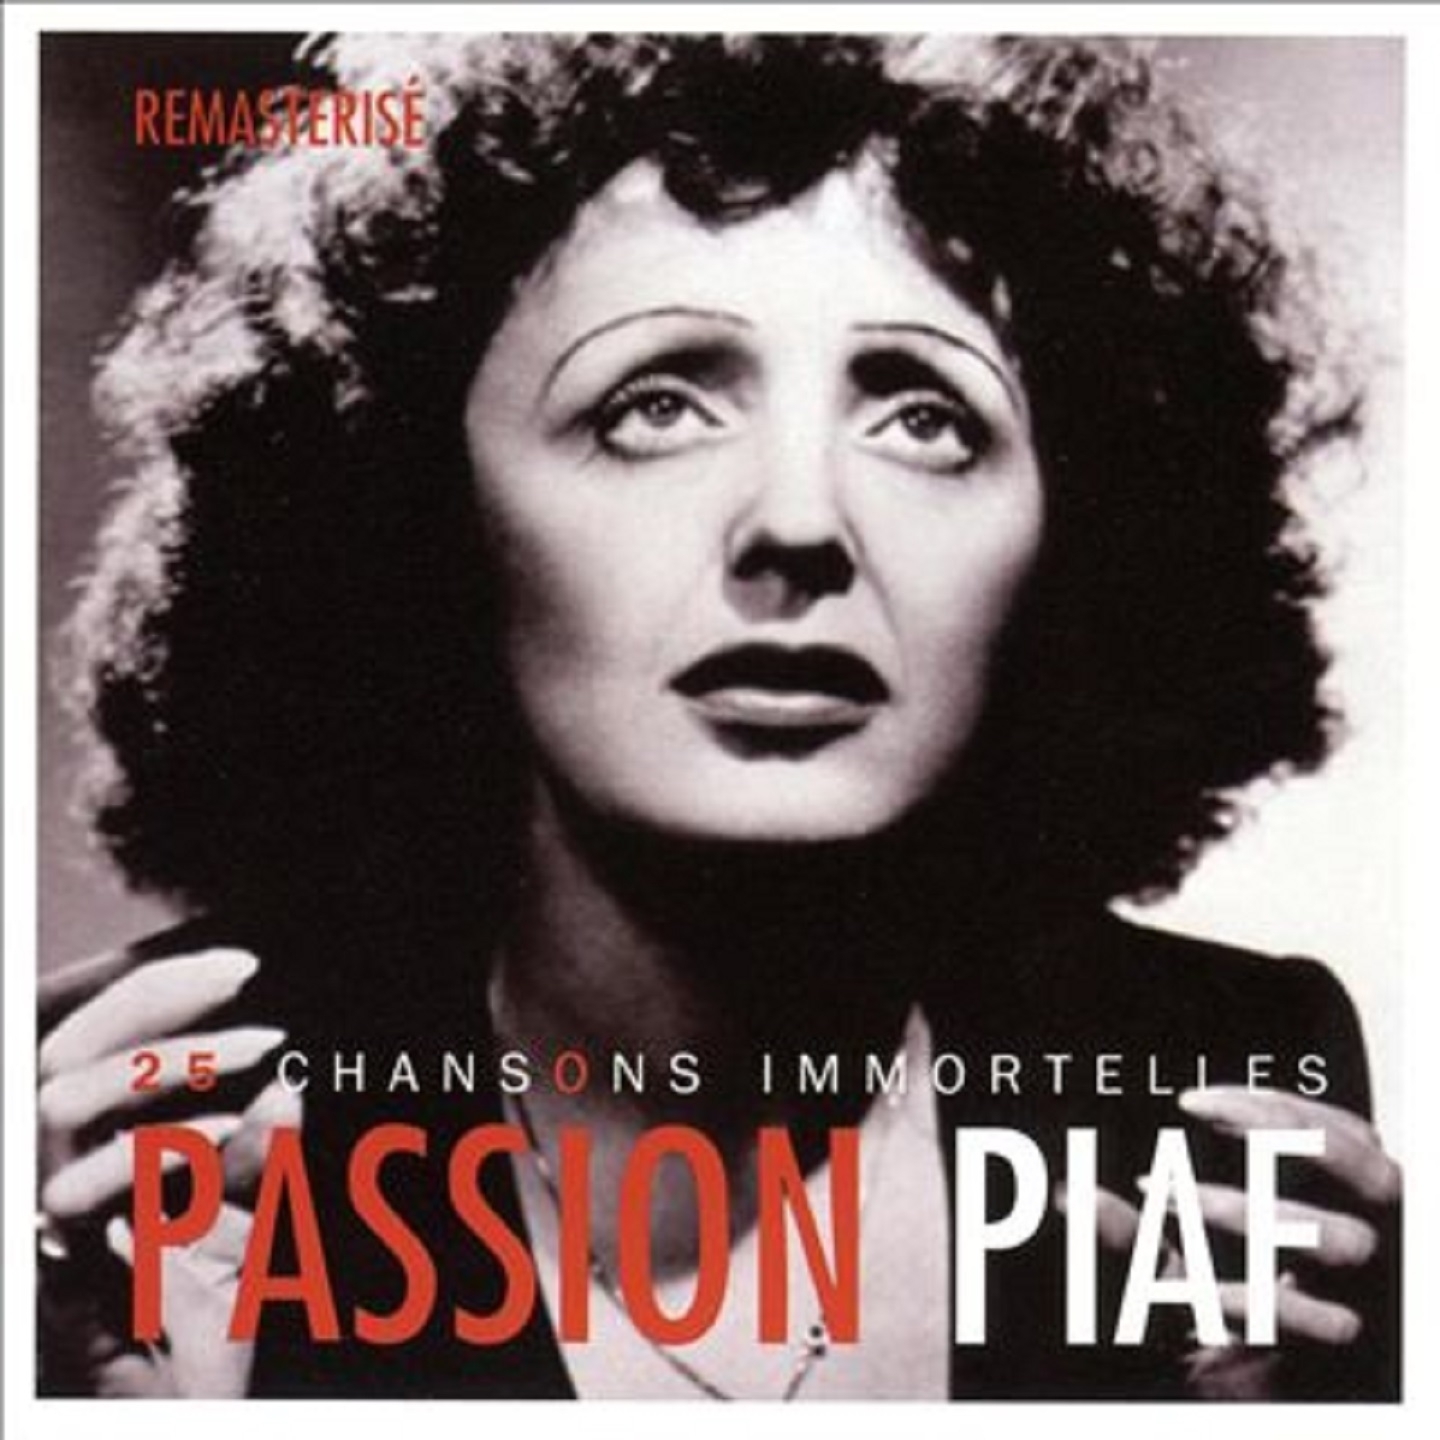 Passion piaf : 25 chansons immortelles Remasterise